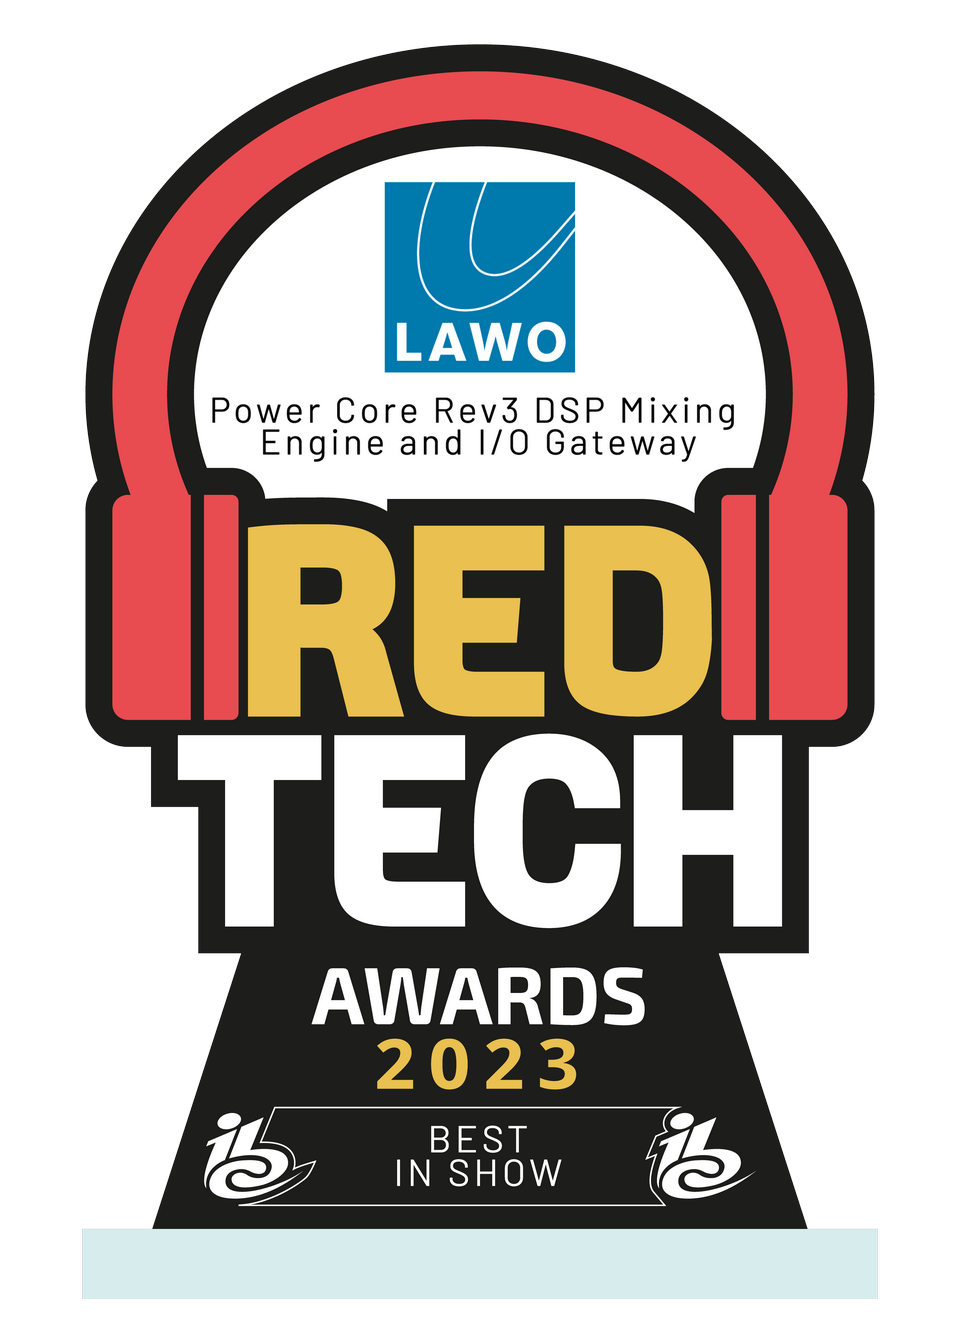 Lawo's Power Core Rev3 Wins RedTech Award 2023 at IBC Show tkt1957.com